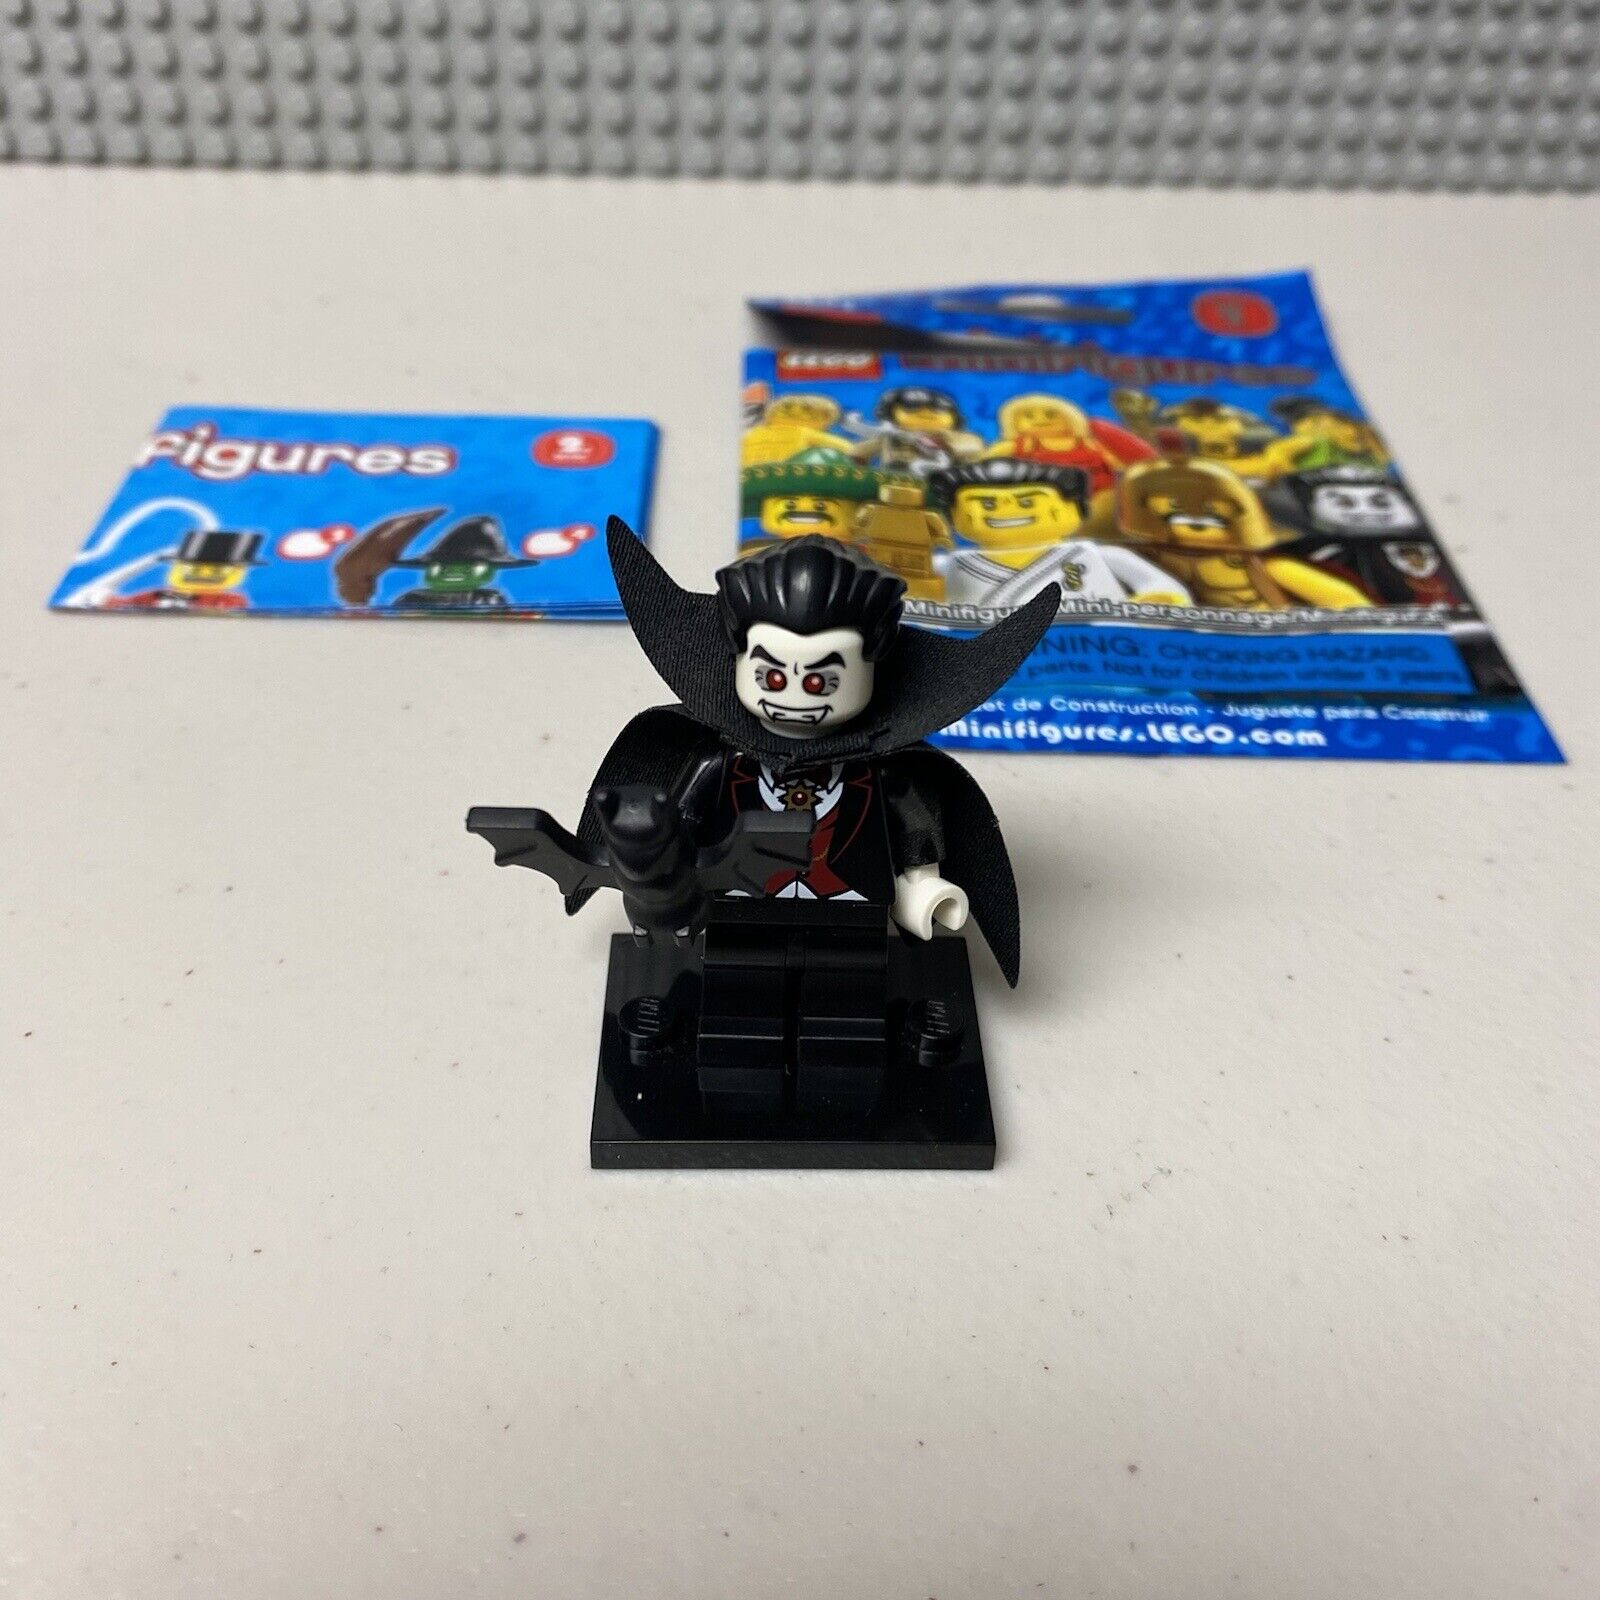 LEGO 8684 Minifigures Series 2 "Vampire" COMPLETE W/ FOIL PACK & CHECKLIST